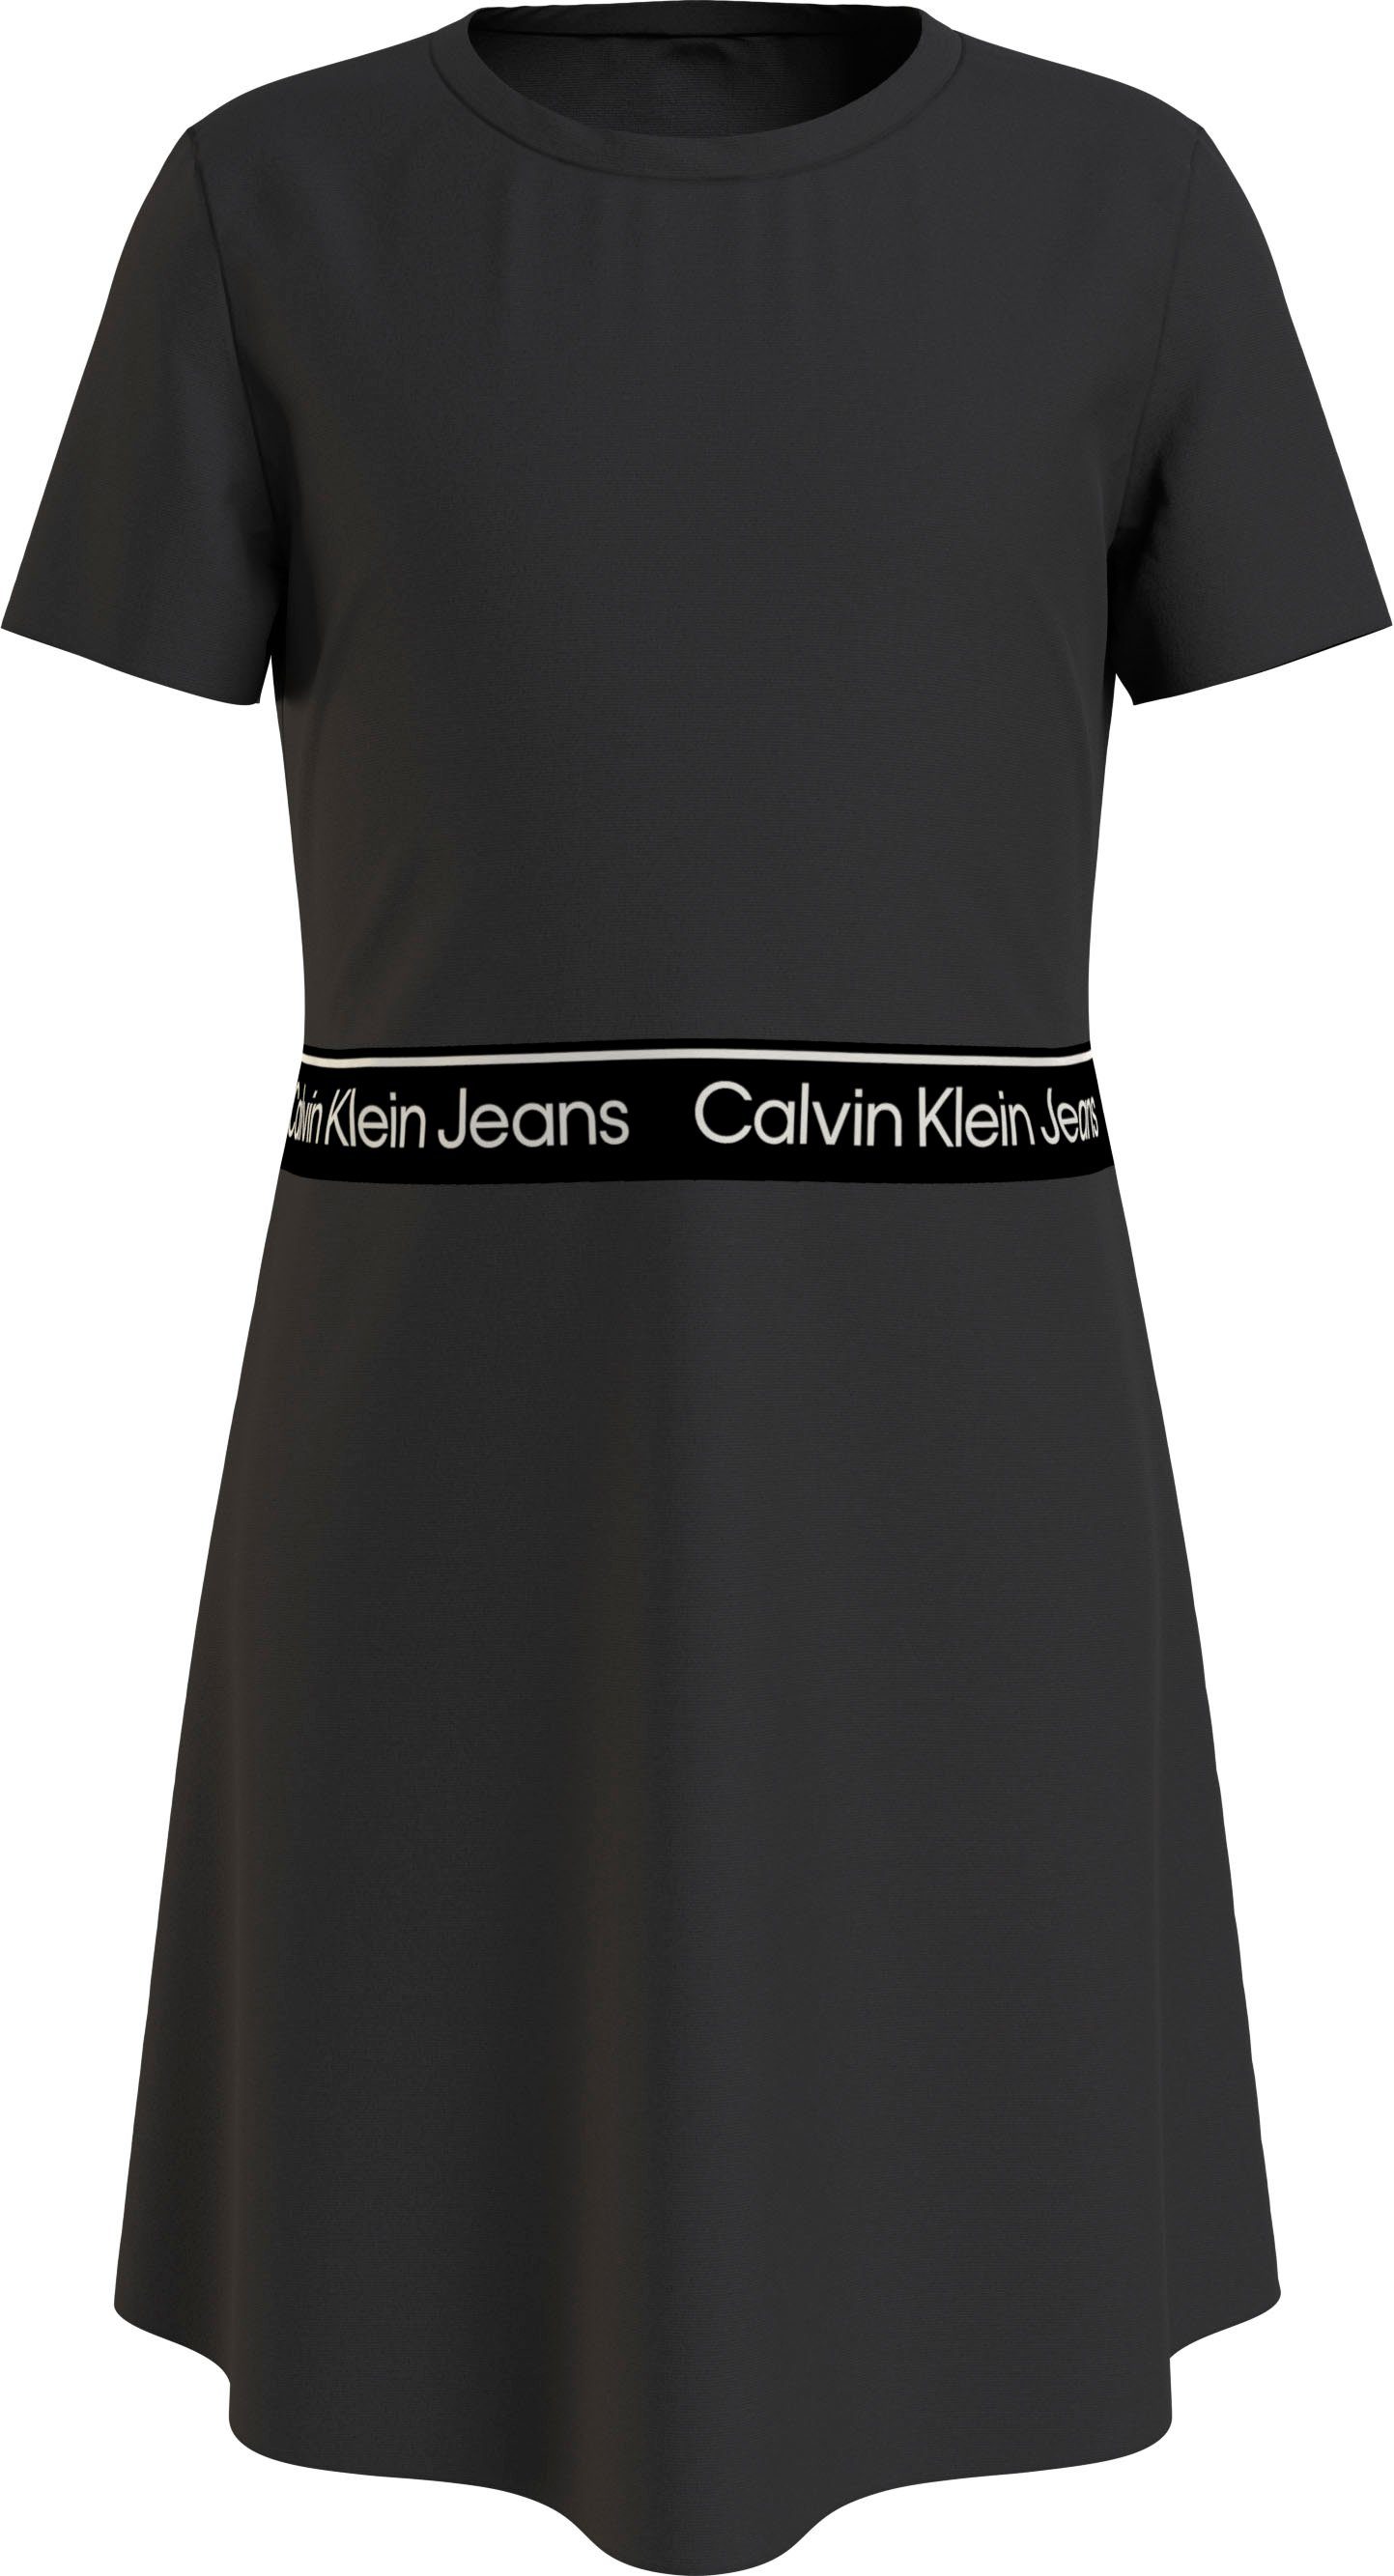 Top-Empfehlung Calvin Klein Jeans Skaterkleid LOGO Black SS TAPE PUNTO Ck DRESS